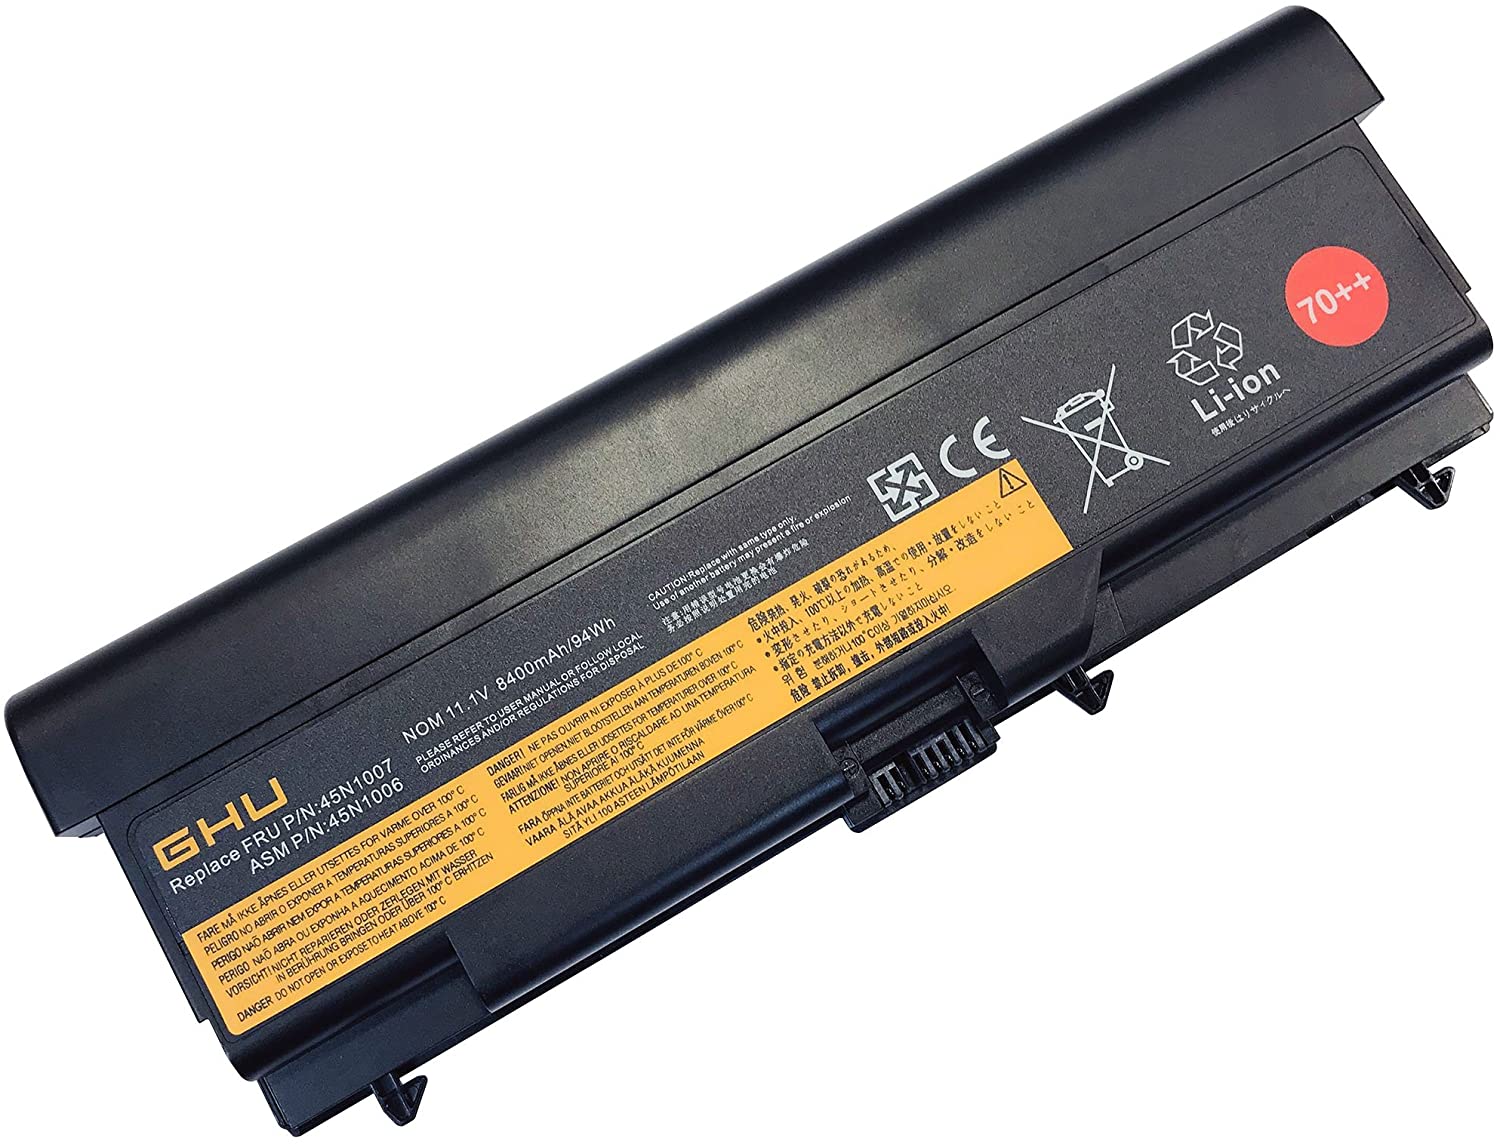 BaterÃ­a genÃ©rica GHU 94 Wh 0A36303 0A36302 45N1001 70++ Compatible con Lenovo Thinkpad T410 T420 T420i T430 L410 L412 L520 L530 E420 E425 E520 E525 SL410 Sl510